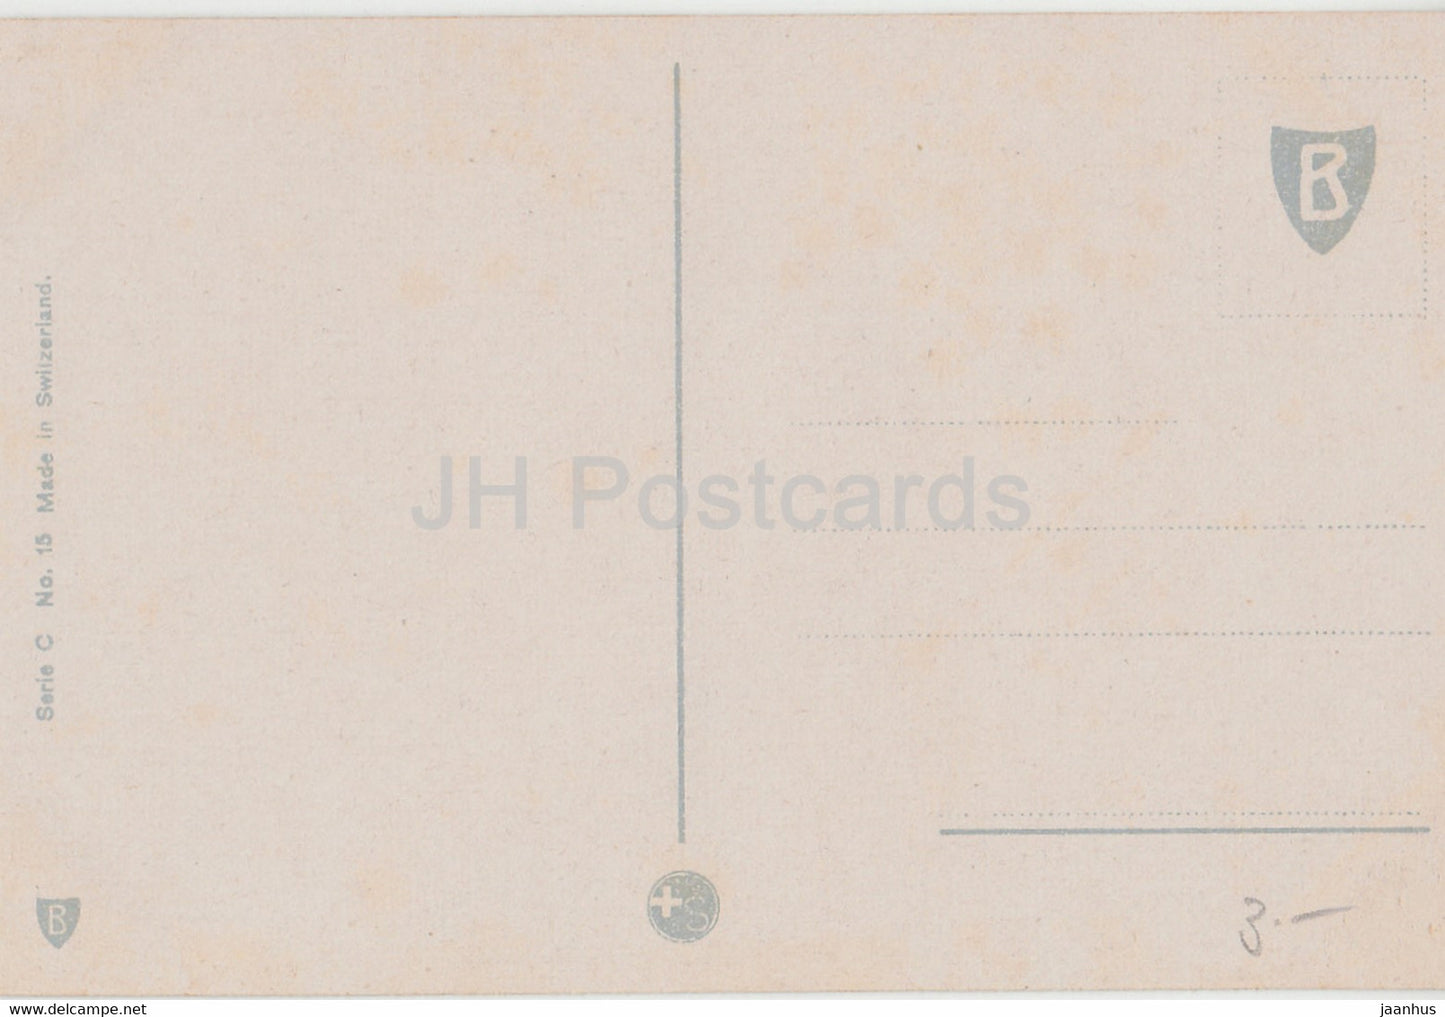 rose orange - fleurs - Série C No 15 - carte postale ancienne - Suisse - inutilisée